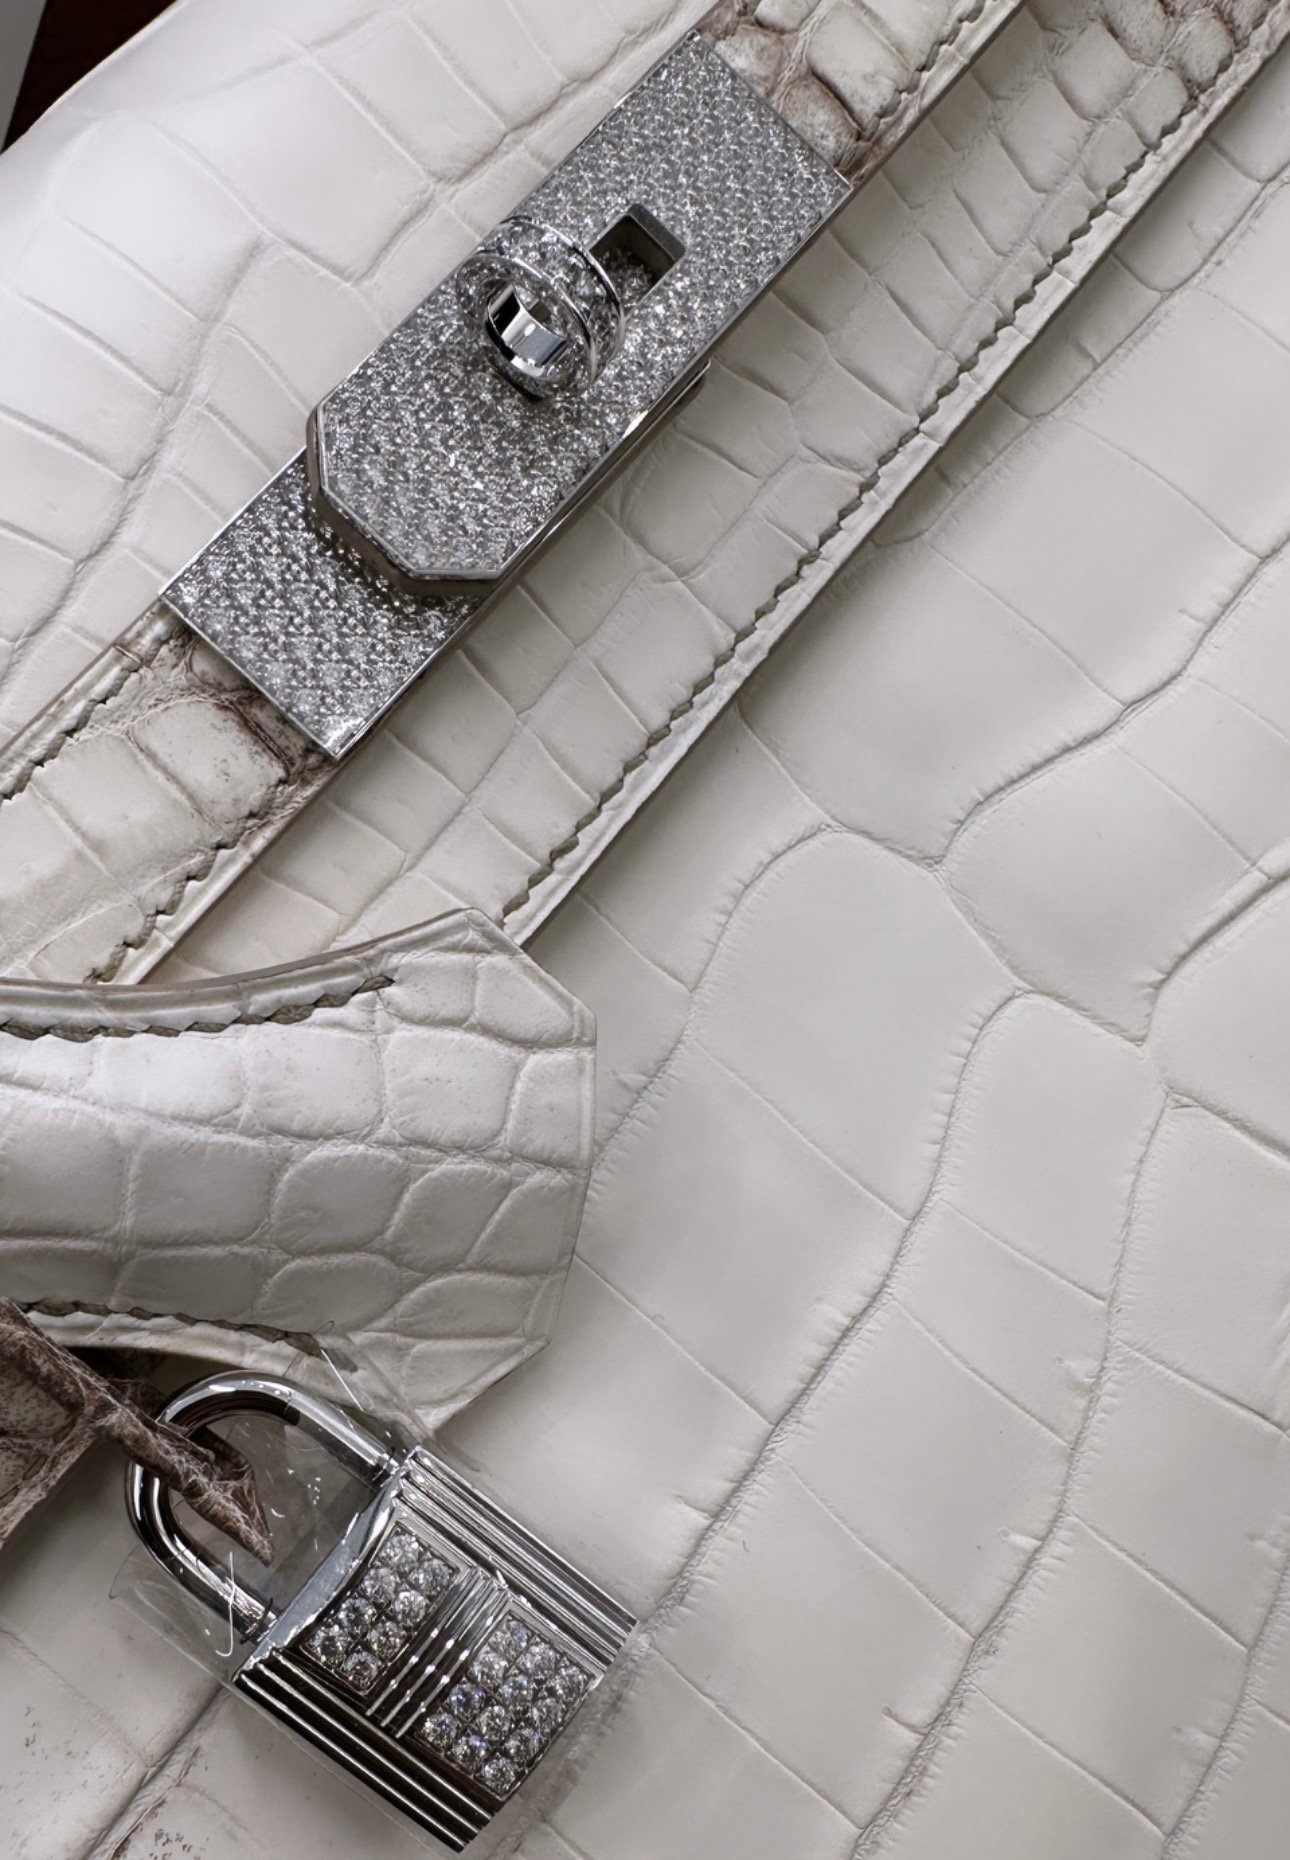 The Ultimate Hermès Handbag: Close Look at Himalaya Kelly - PurseBop